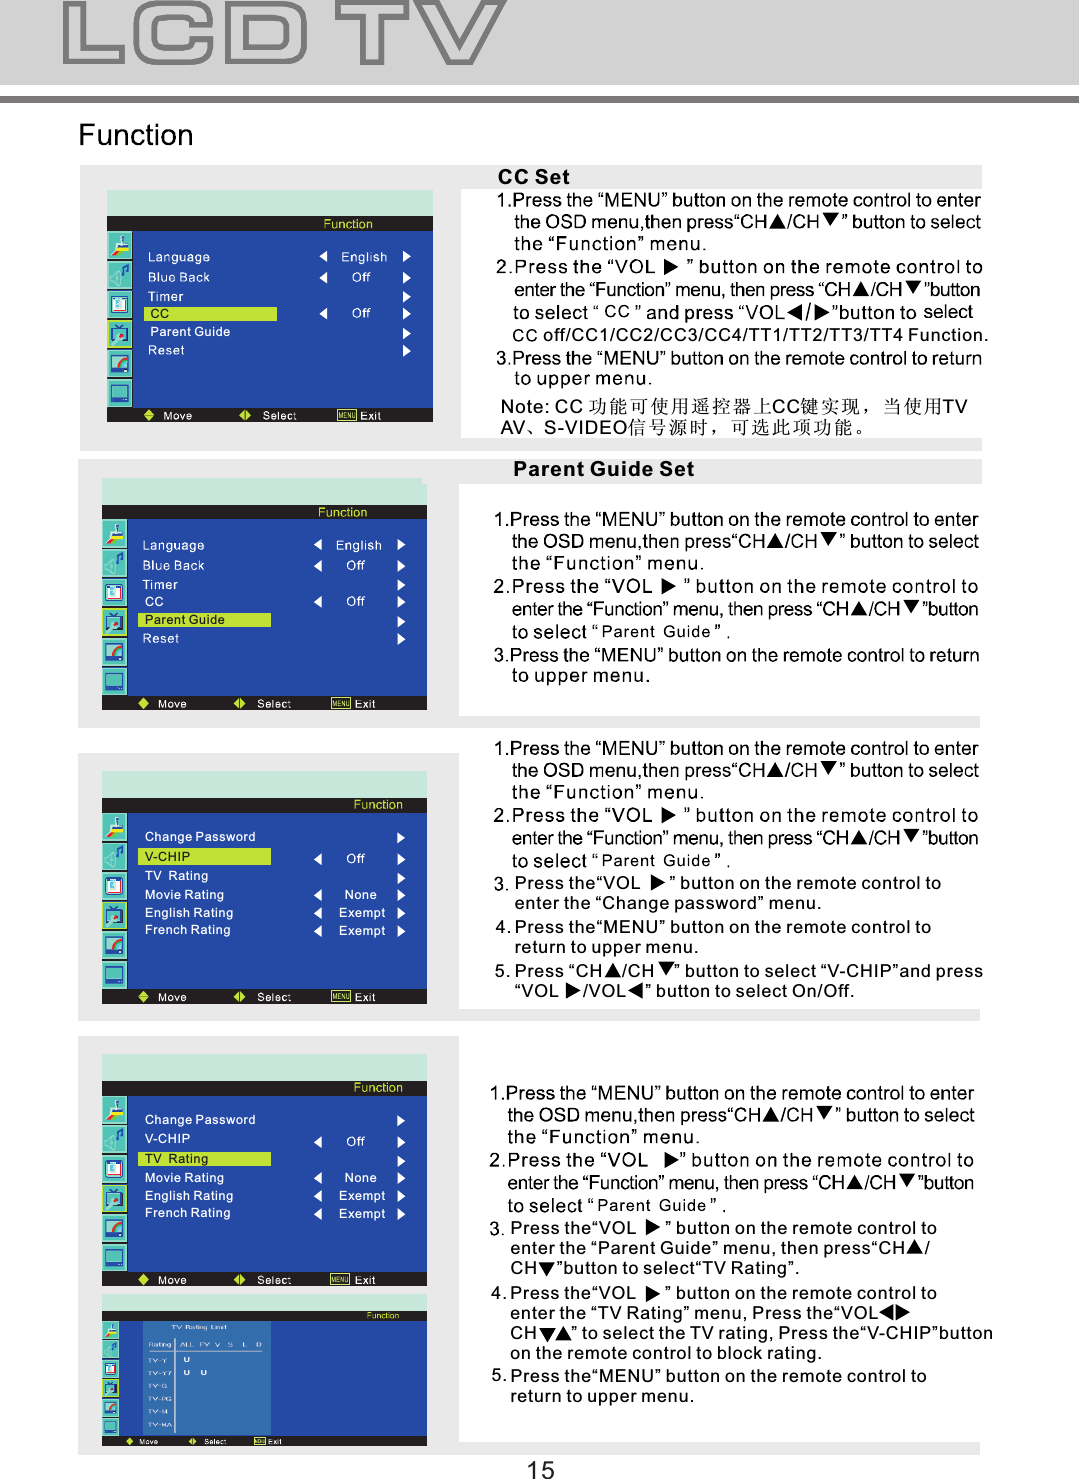 CCParent GuideCCParent Guide off/CC1/CC2/CC3/CC4/TT1/TT2/TT3/TT4 Function.Press the“VOL      ” button on the remote control toenter the “Change password” menu.     Movie RatingEnglish RatingTV  RatingV-CHIPChange PasswordFrench RatingNoneExemptExempt Press the“MENU” button on the remote control toreturn to upper menu.     4.Press “CH    /CH    ” button to select “V-CHIP”and press“VOL     /VOL    ” button to select On/Off.5.Press the“VOL      ” button on the remote control toenter the “Parent Guide” menu, then press“CH    /CH    ”button to select“TV Rating”.     Movie RatingEnglish RatingTV  RatingV-CHIPChange PasswordFrench RatingNoneExemptExemptPress the“VOL      ” button on the remote control toenter the “TV Rating” menu, Press the“VOL       CH       ” to select the TV rating, Press the“V-CHIP”buttonon the remote control to block rating.      4.UU UPress the“MENU” button on the remote control toreturn to upper menu.     5.15Note: CC 功能可使用遥控器上CC键实现，当使用TVAV、S-VIDEO信号源时，可选此项功能。CC SetParent Guide Set